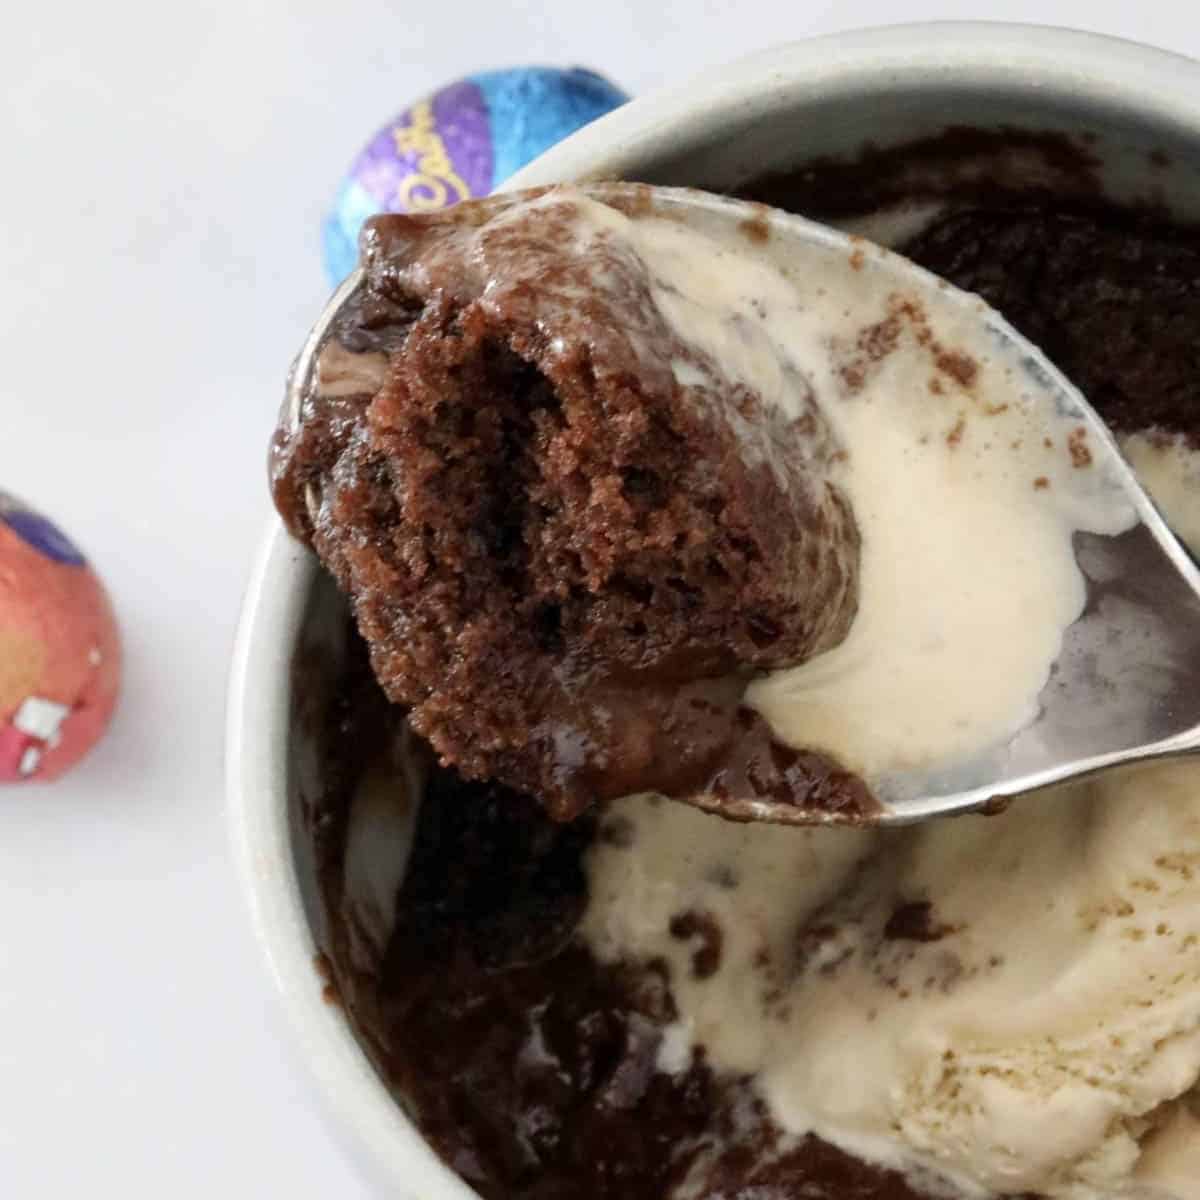 A spoonful of chocolate Easter egg mug cake with ice cream.